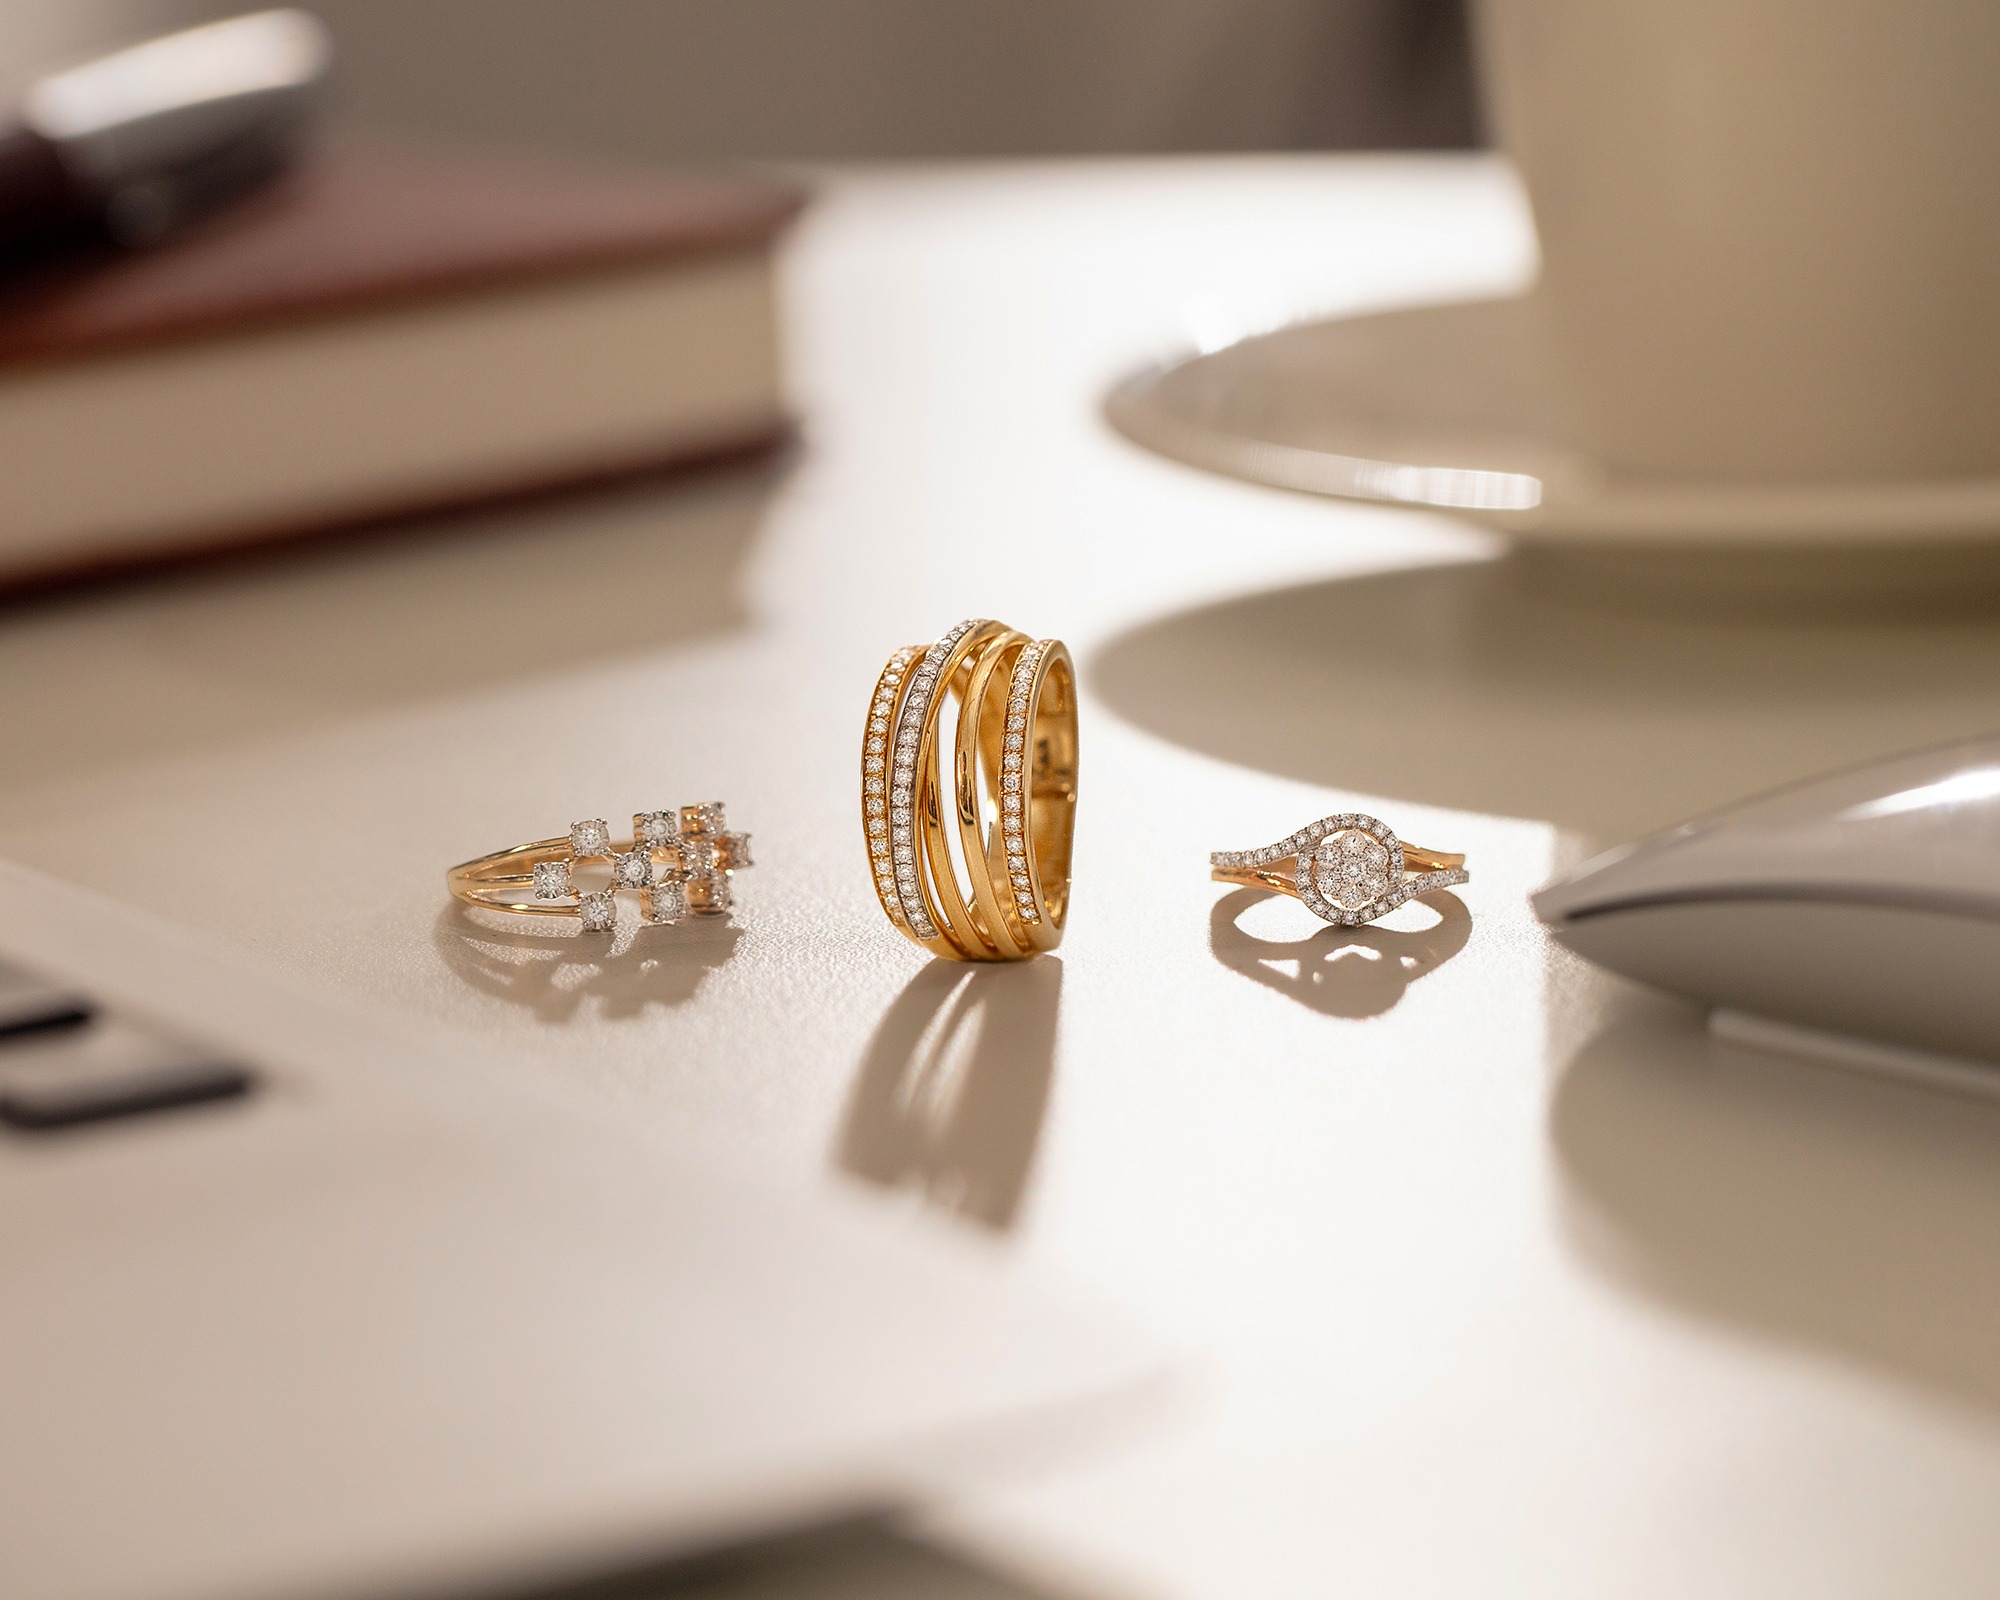 Latest Gold Ring Designs: यहाँ देखे सोने के अंगूठी की बेहतरीन डिजाइन -  Uprising Bihar